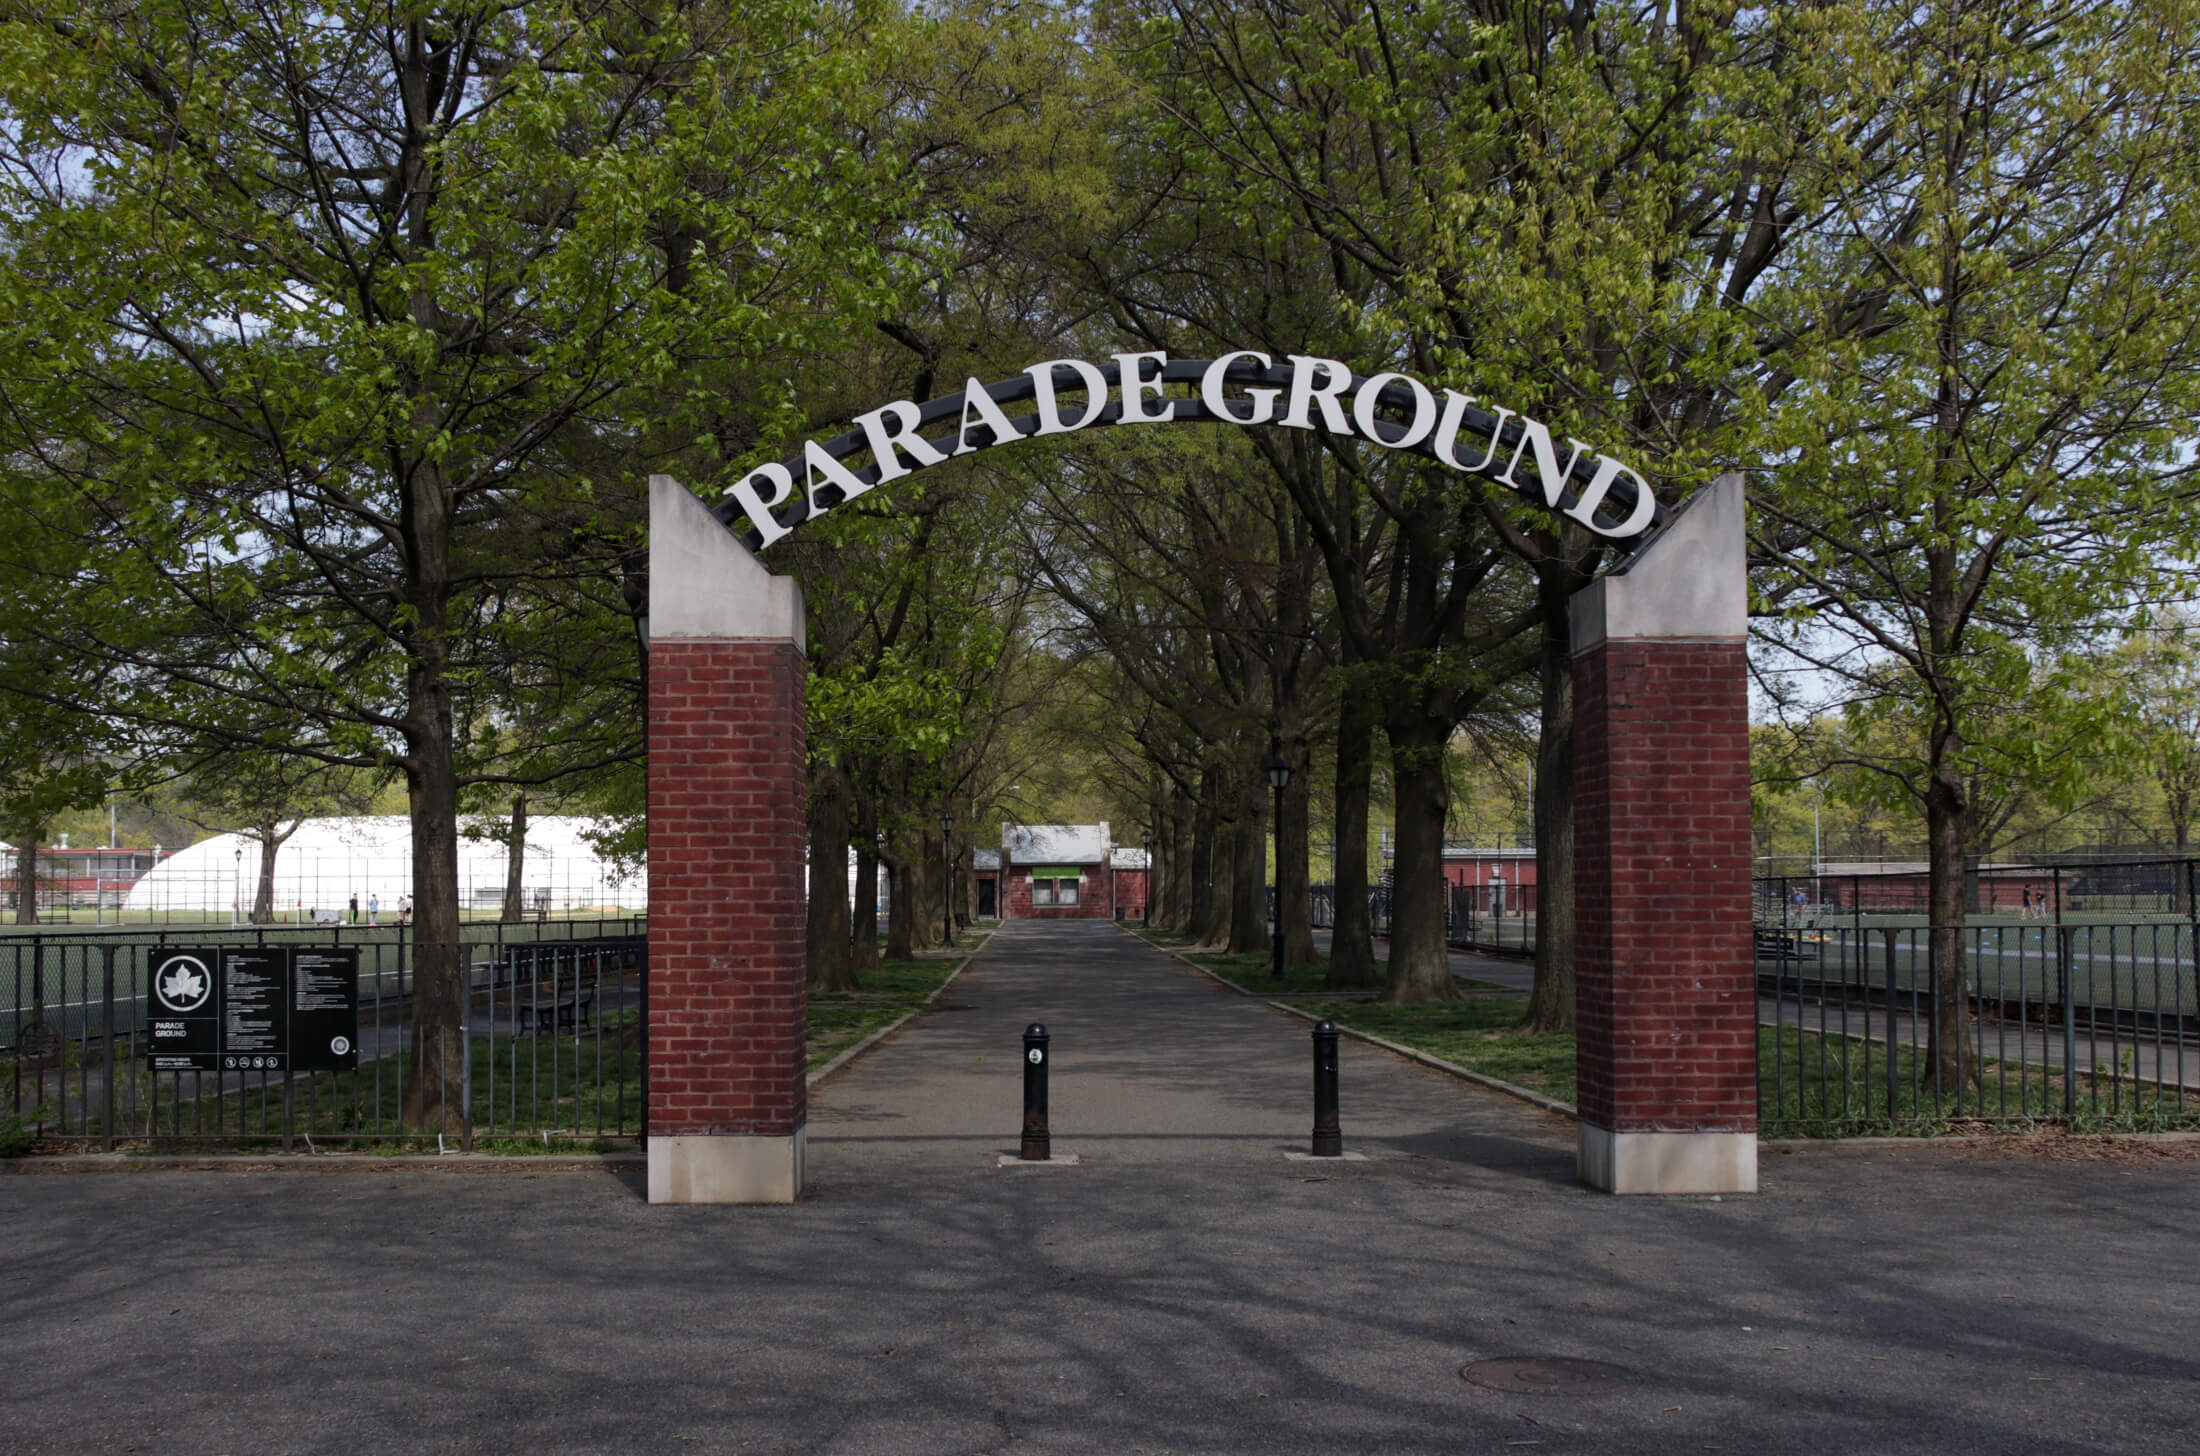 the prospect park parade ground sign